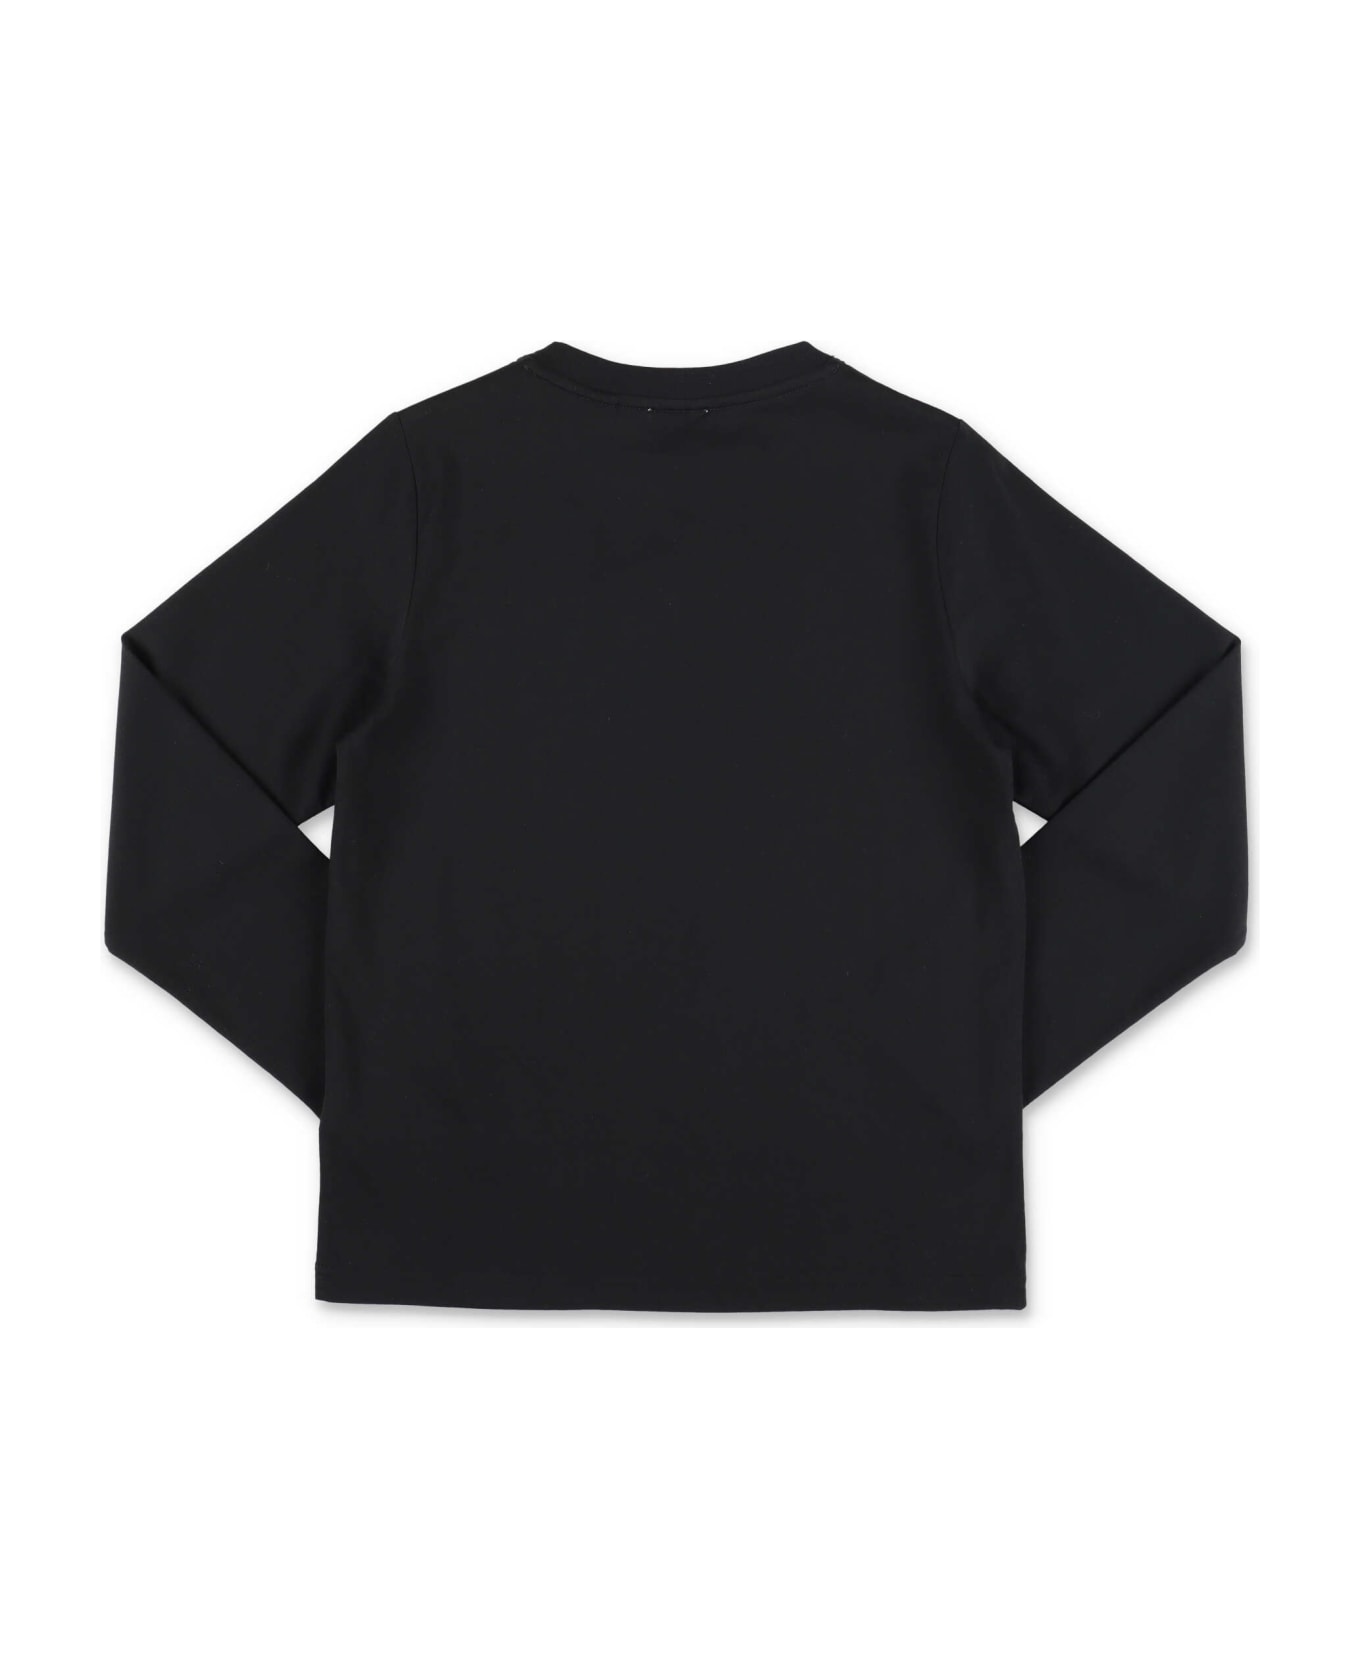 Burberry T-shirt Nera In Jersey Di Cotone - BLACK Tシャツ＆ポロシャツ